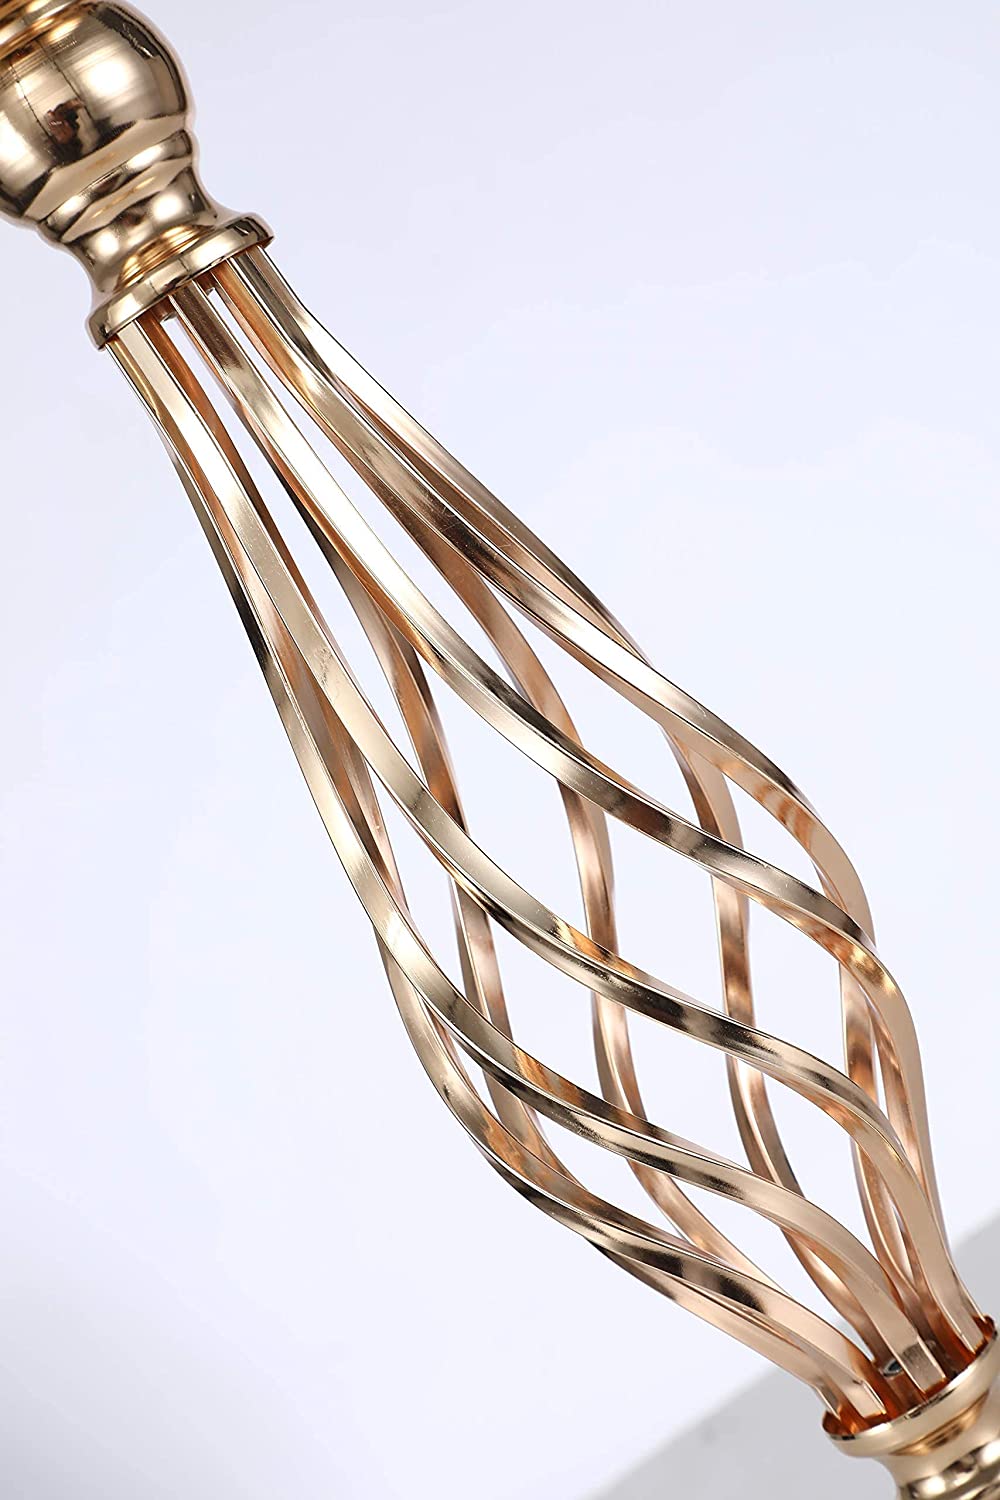 2-Piece Metal Gold Candle Holder Table Centerpiece Stand Pillar Candlestick